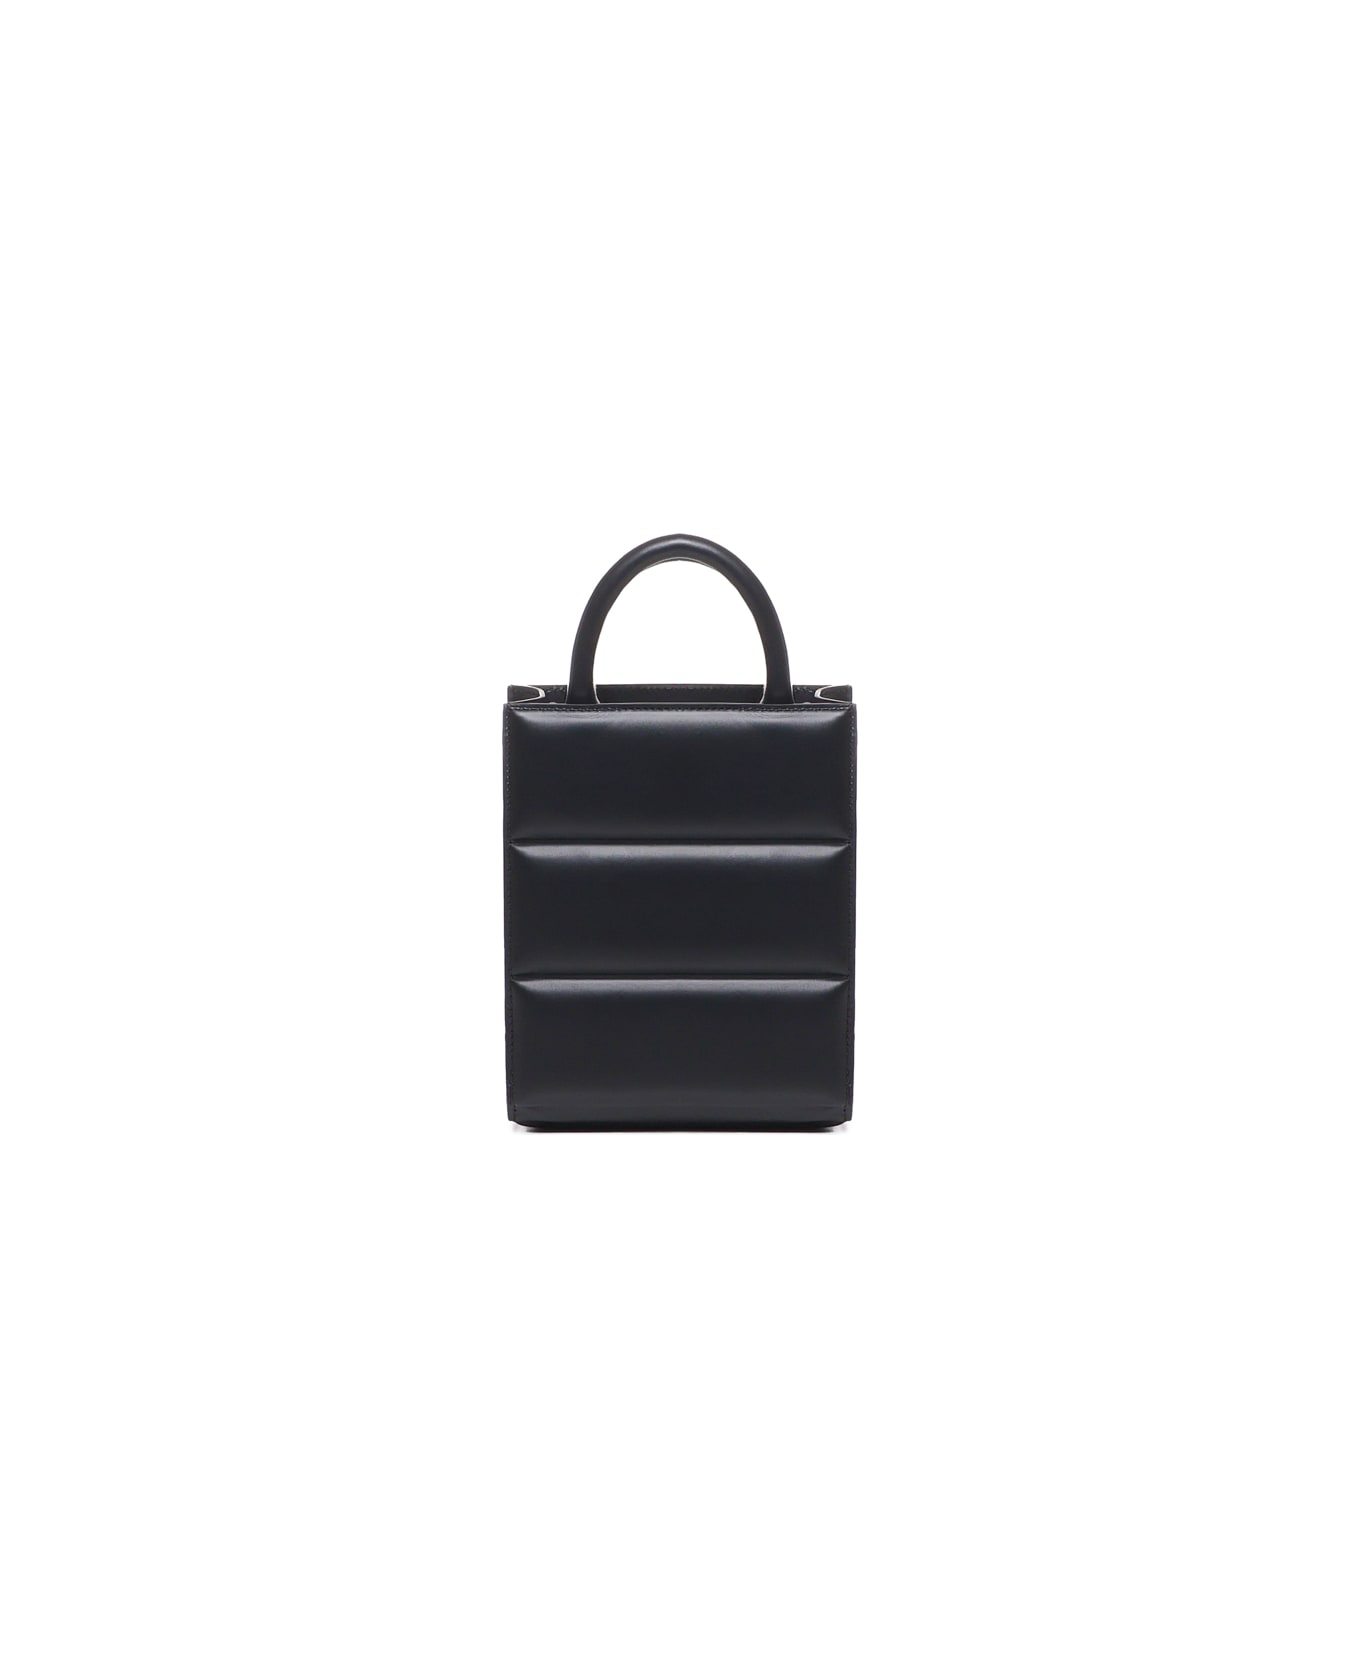 Moncler Leather Doudoune Mini Tote Bag - Black トートバッグ